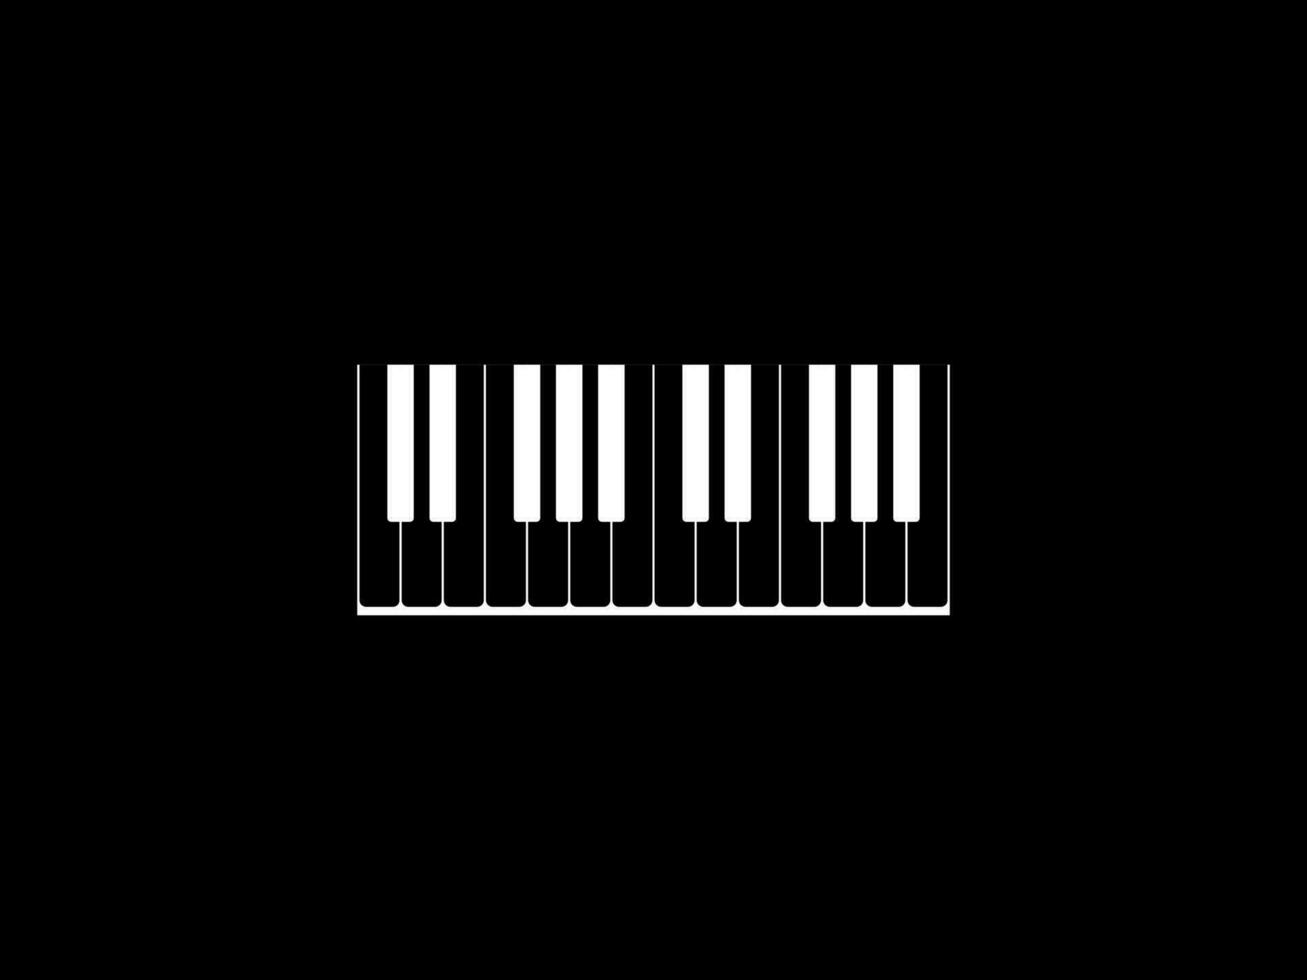 piano teclado silueta, lata utilizar para Arte ilustración, logo gramo, pictograma, sitio web, o gráfico diseño elemento. vector ilustración